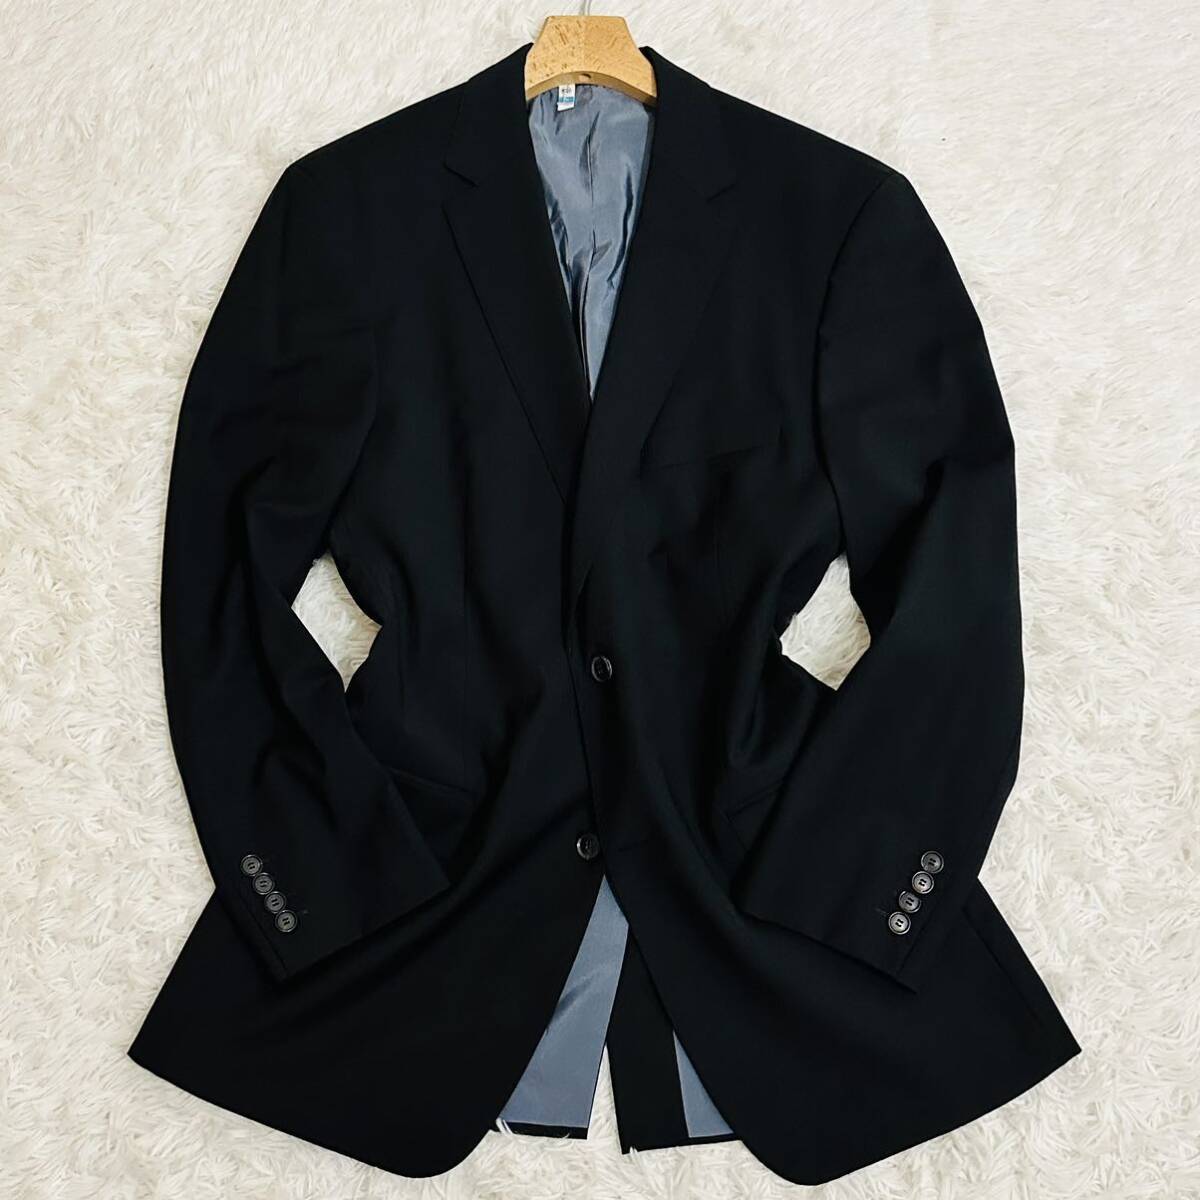  super rare XXL(52) Hugo Boss suit setup business tailored jacket 2B wool men's large size black black HUGO BOSS